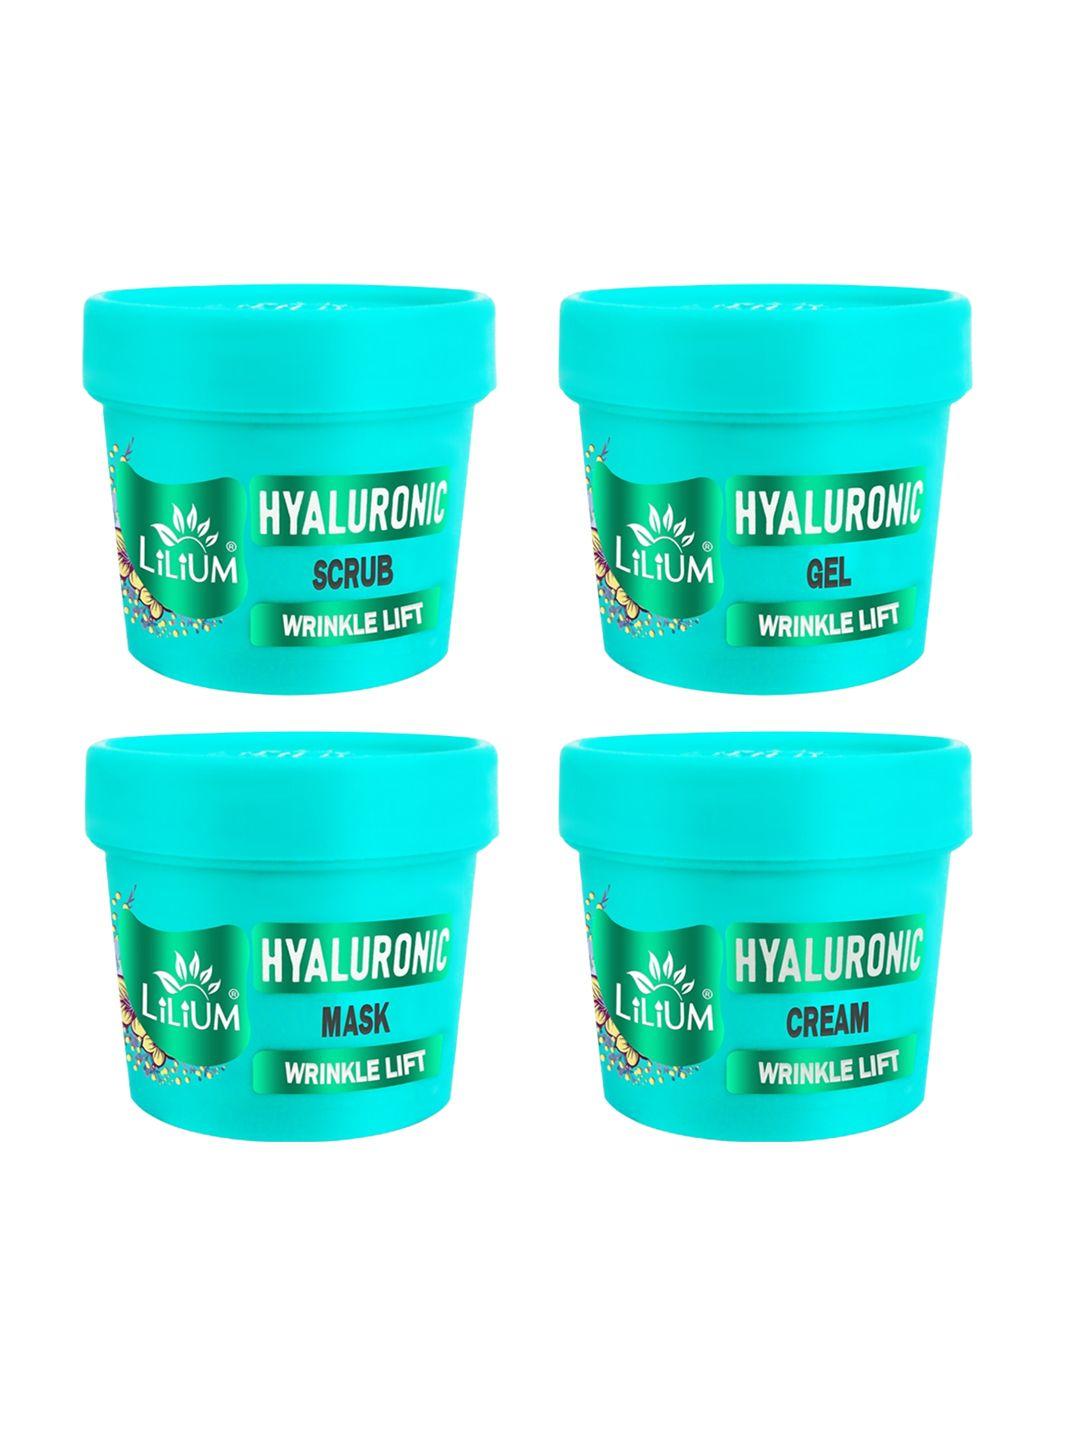 lilium hyaluronic facial scrub gel mask cream set for wrinkle lift - 100g each